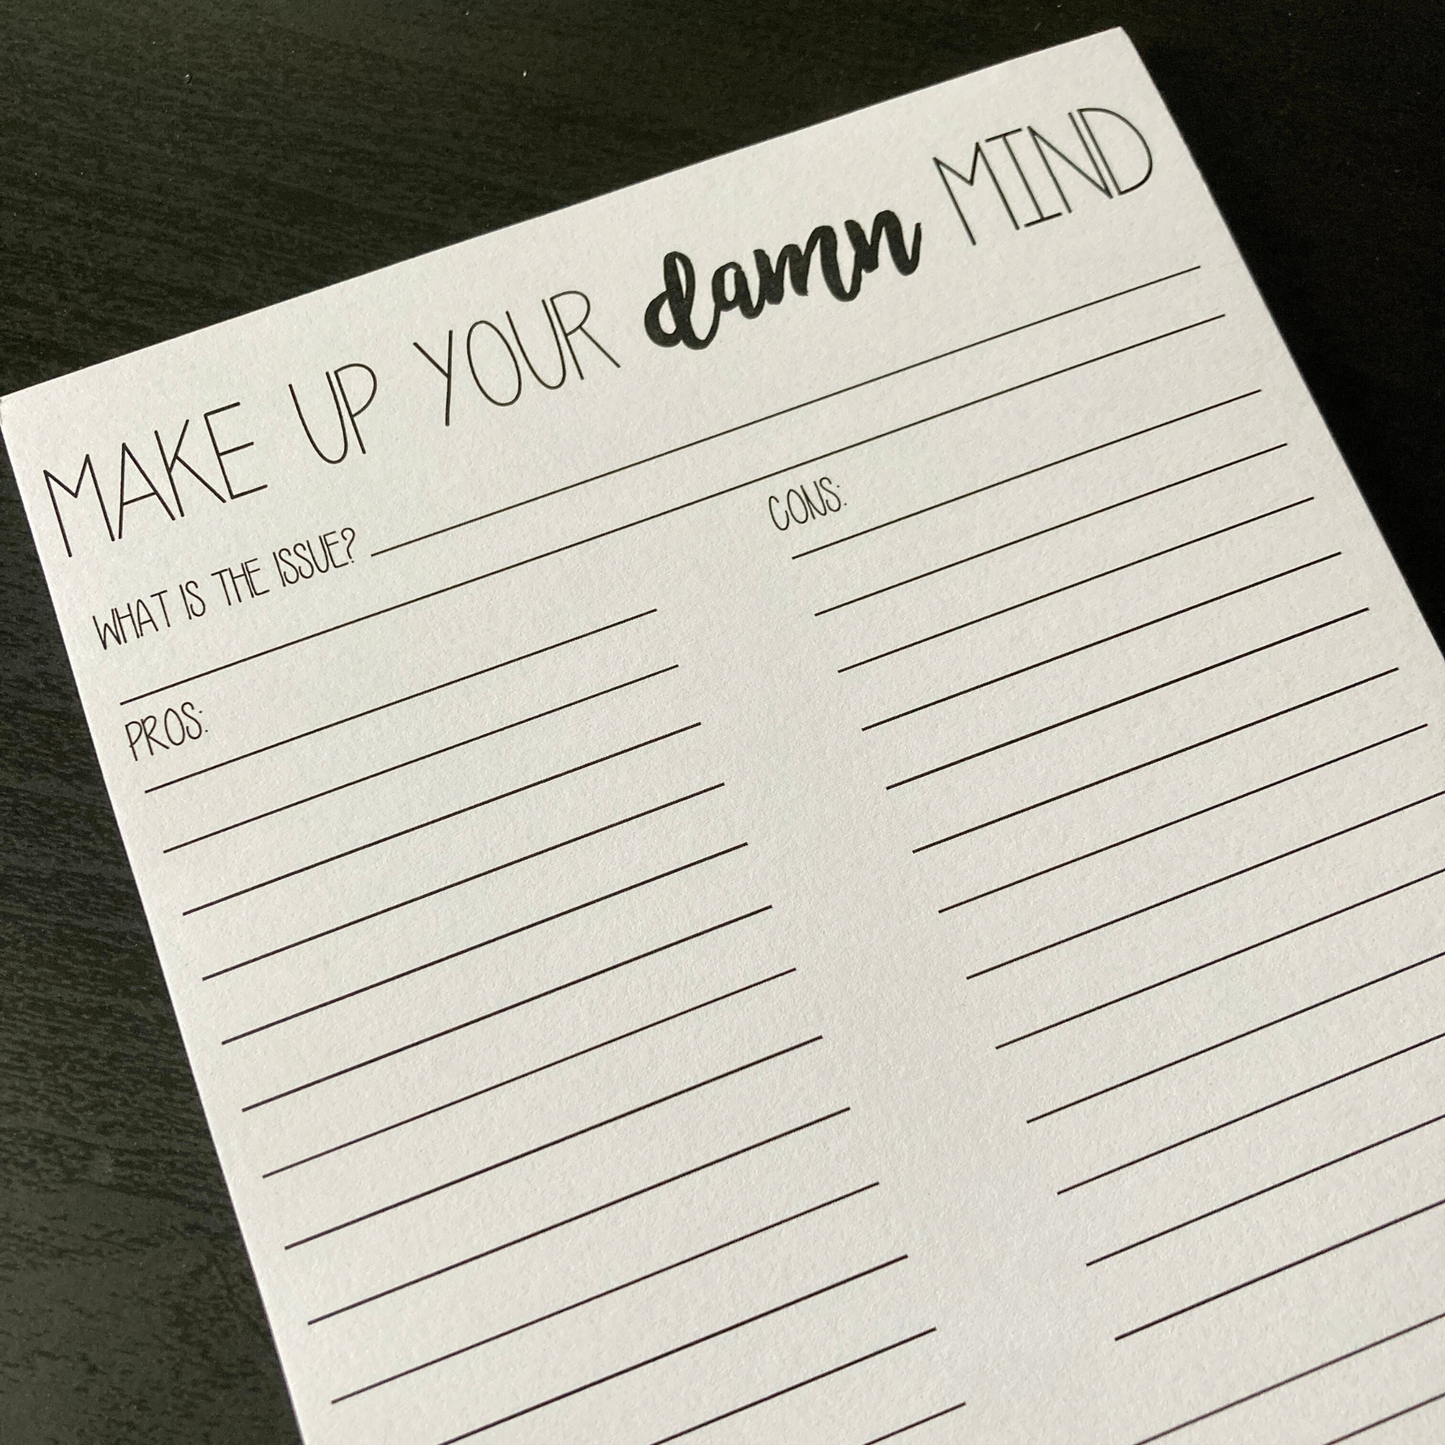 Make Up Your Damn Mind Notepad